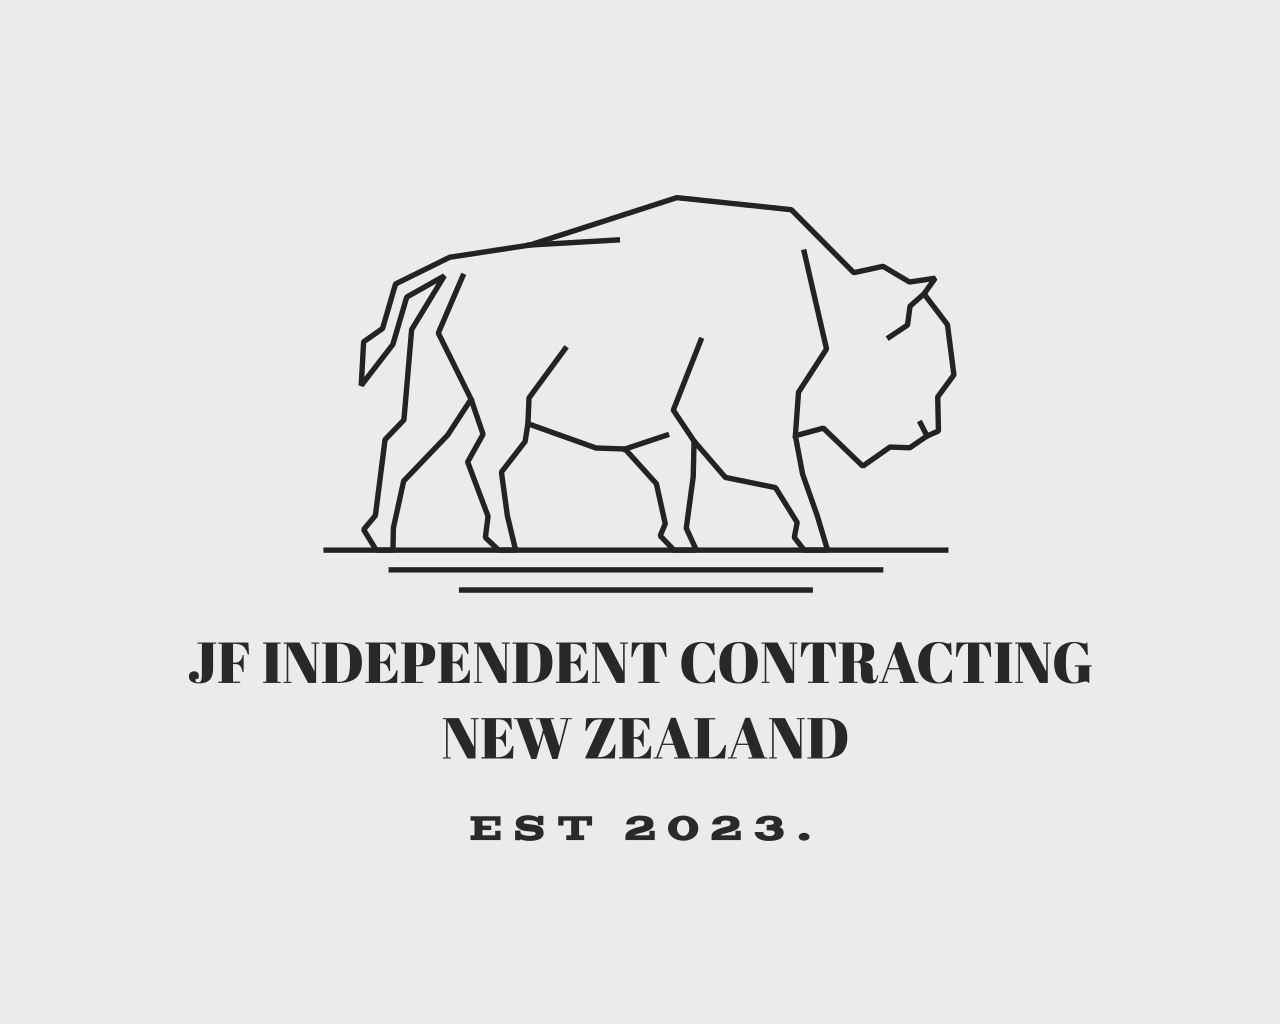 JFIC-NZ's web page